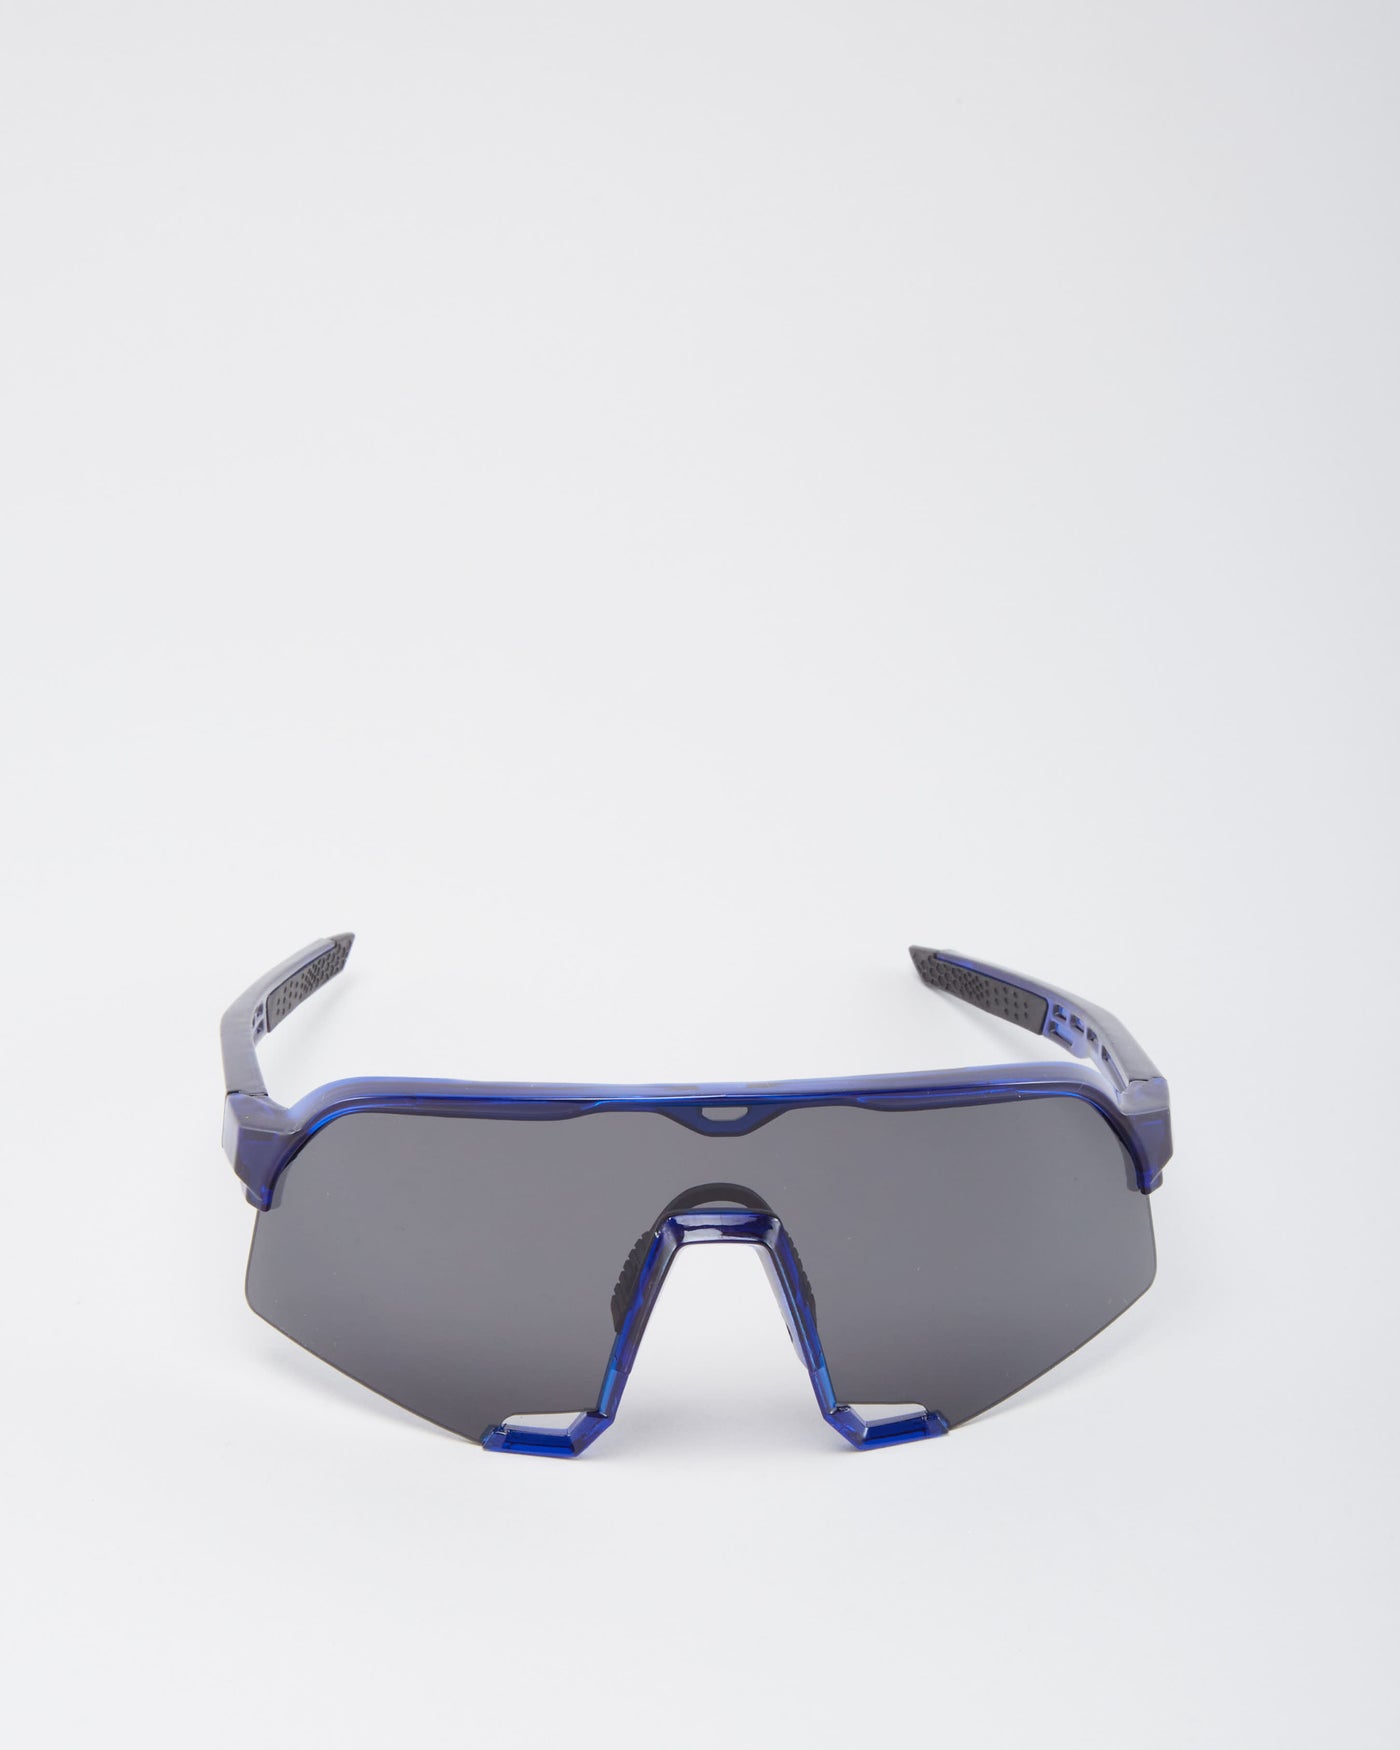 Strider Blue Sunglasses